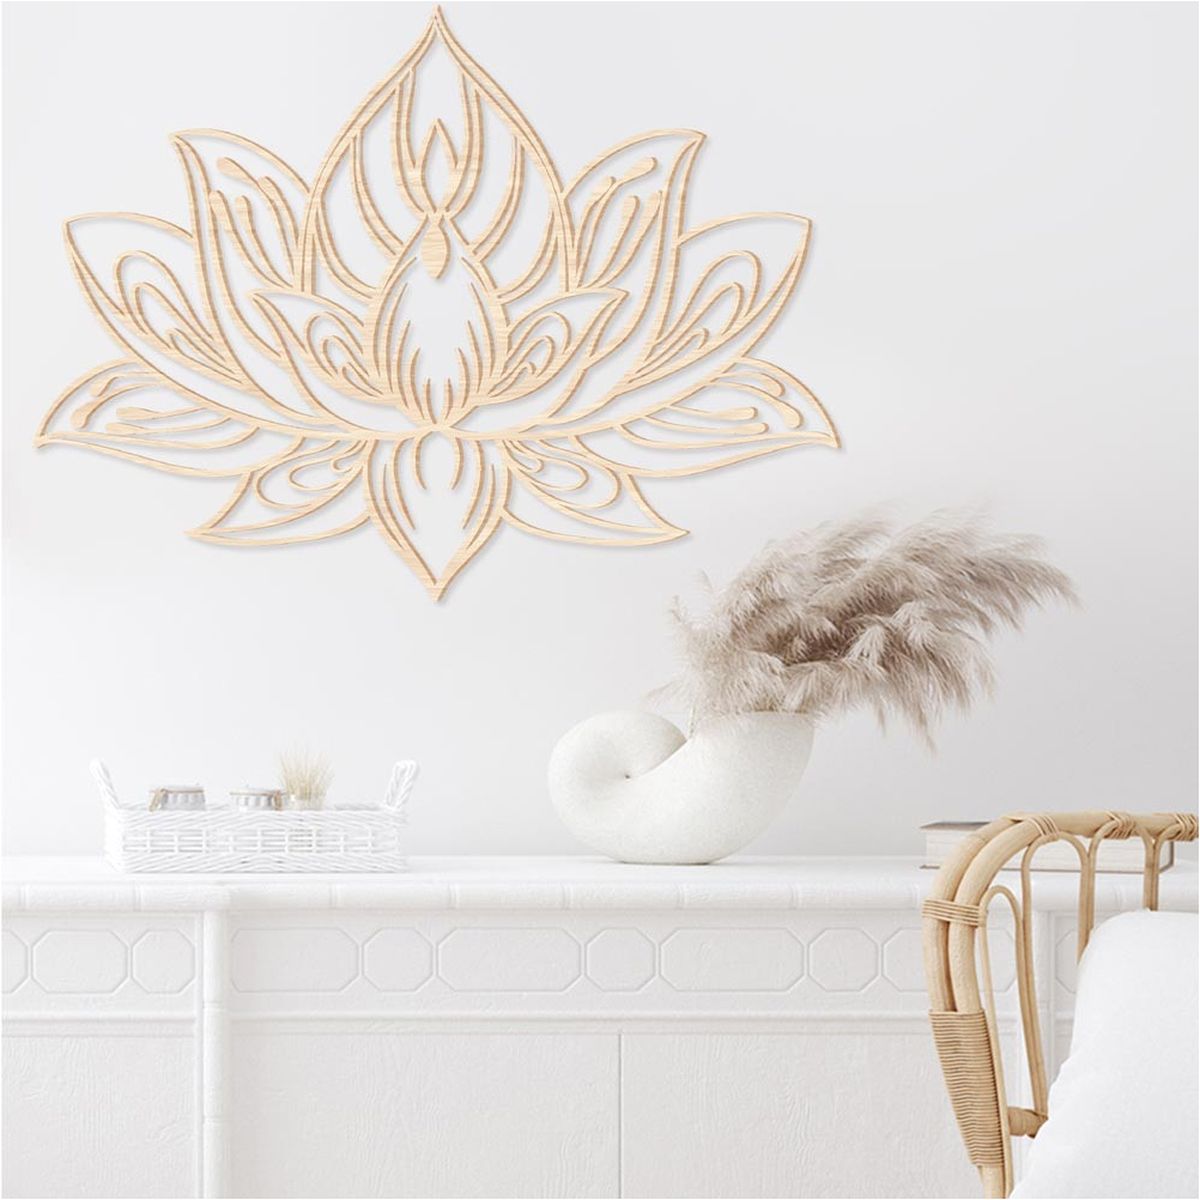 Dcoration murale en bois Lotus